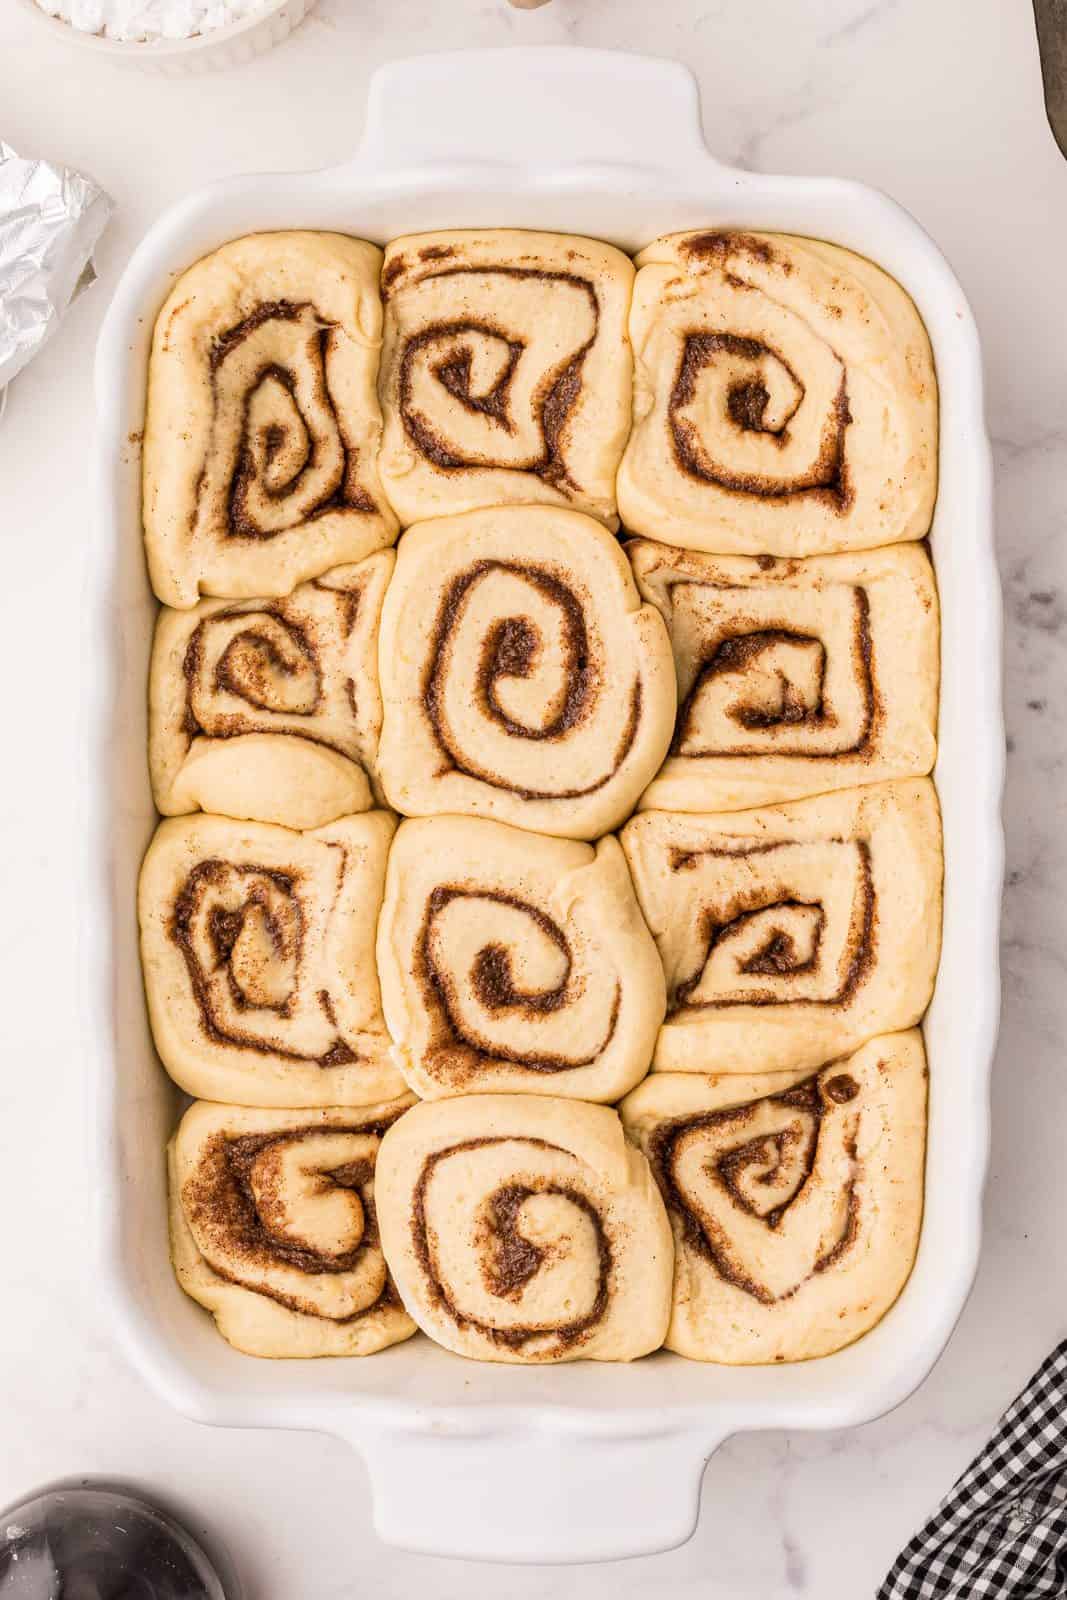 Risen cinnamon rolls in baking pan.